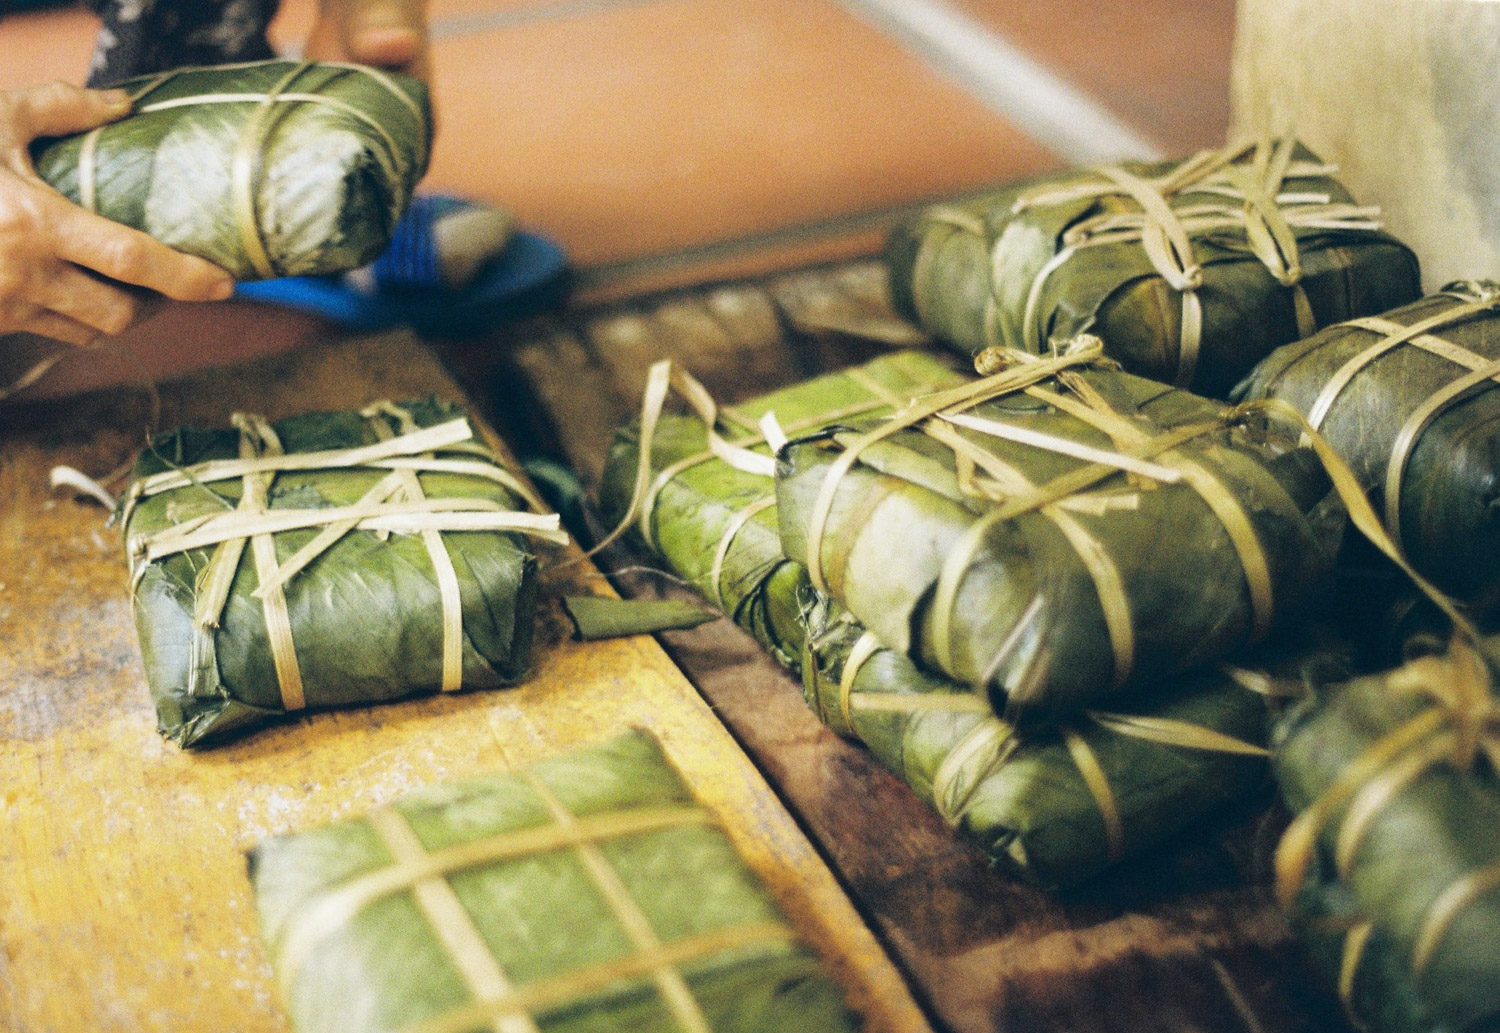 banh chung wrapped